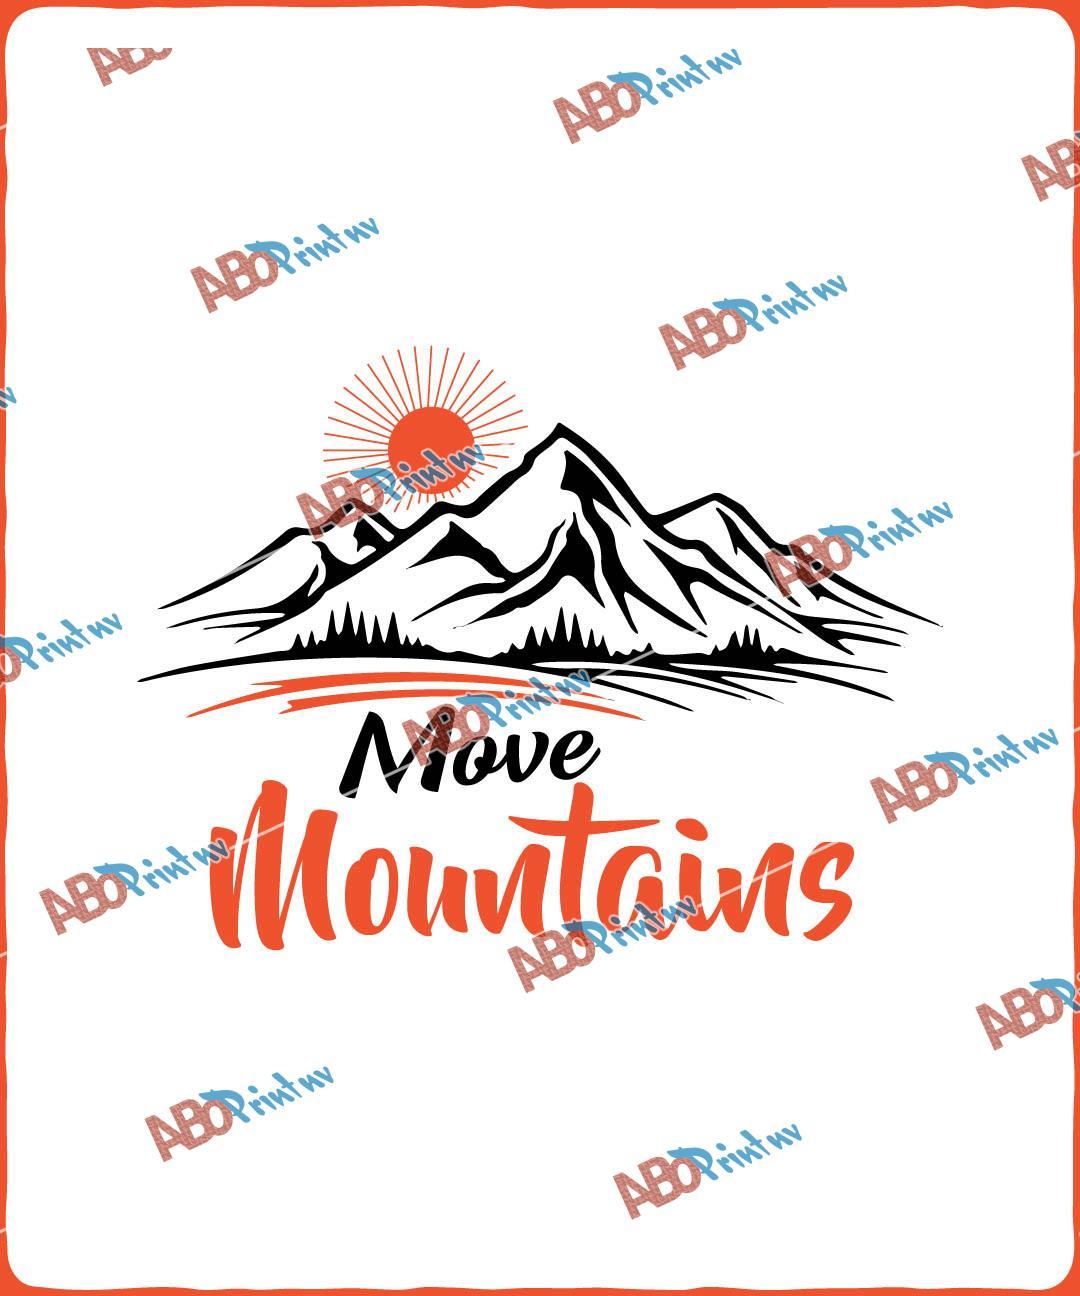 Move mountains.jpg